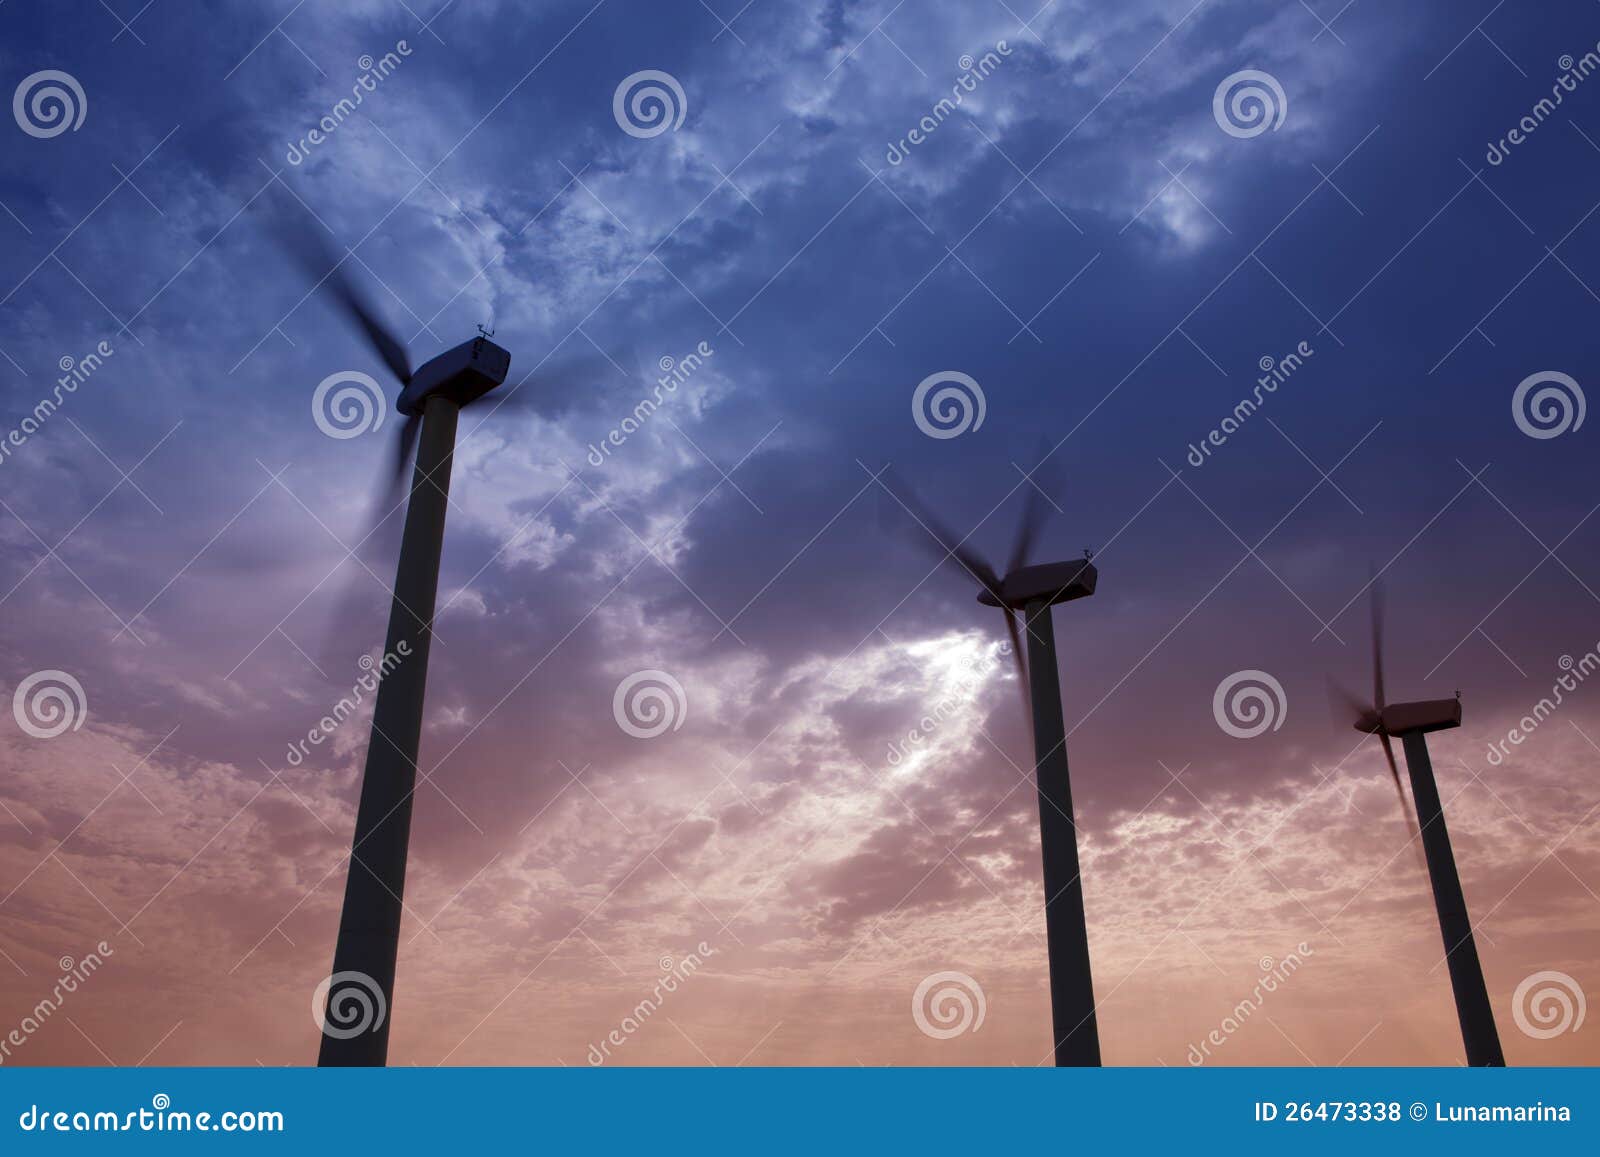 aerogenerator windmills on dramatic sunset sky